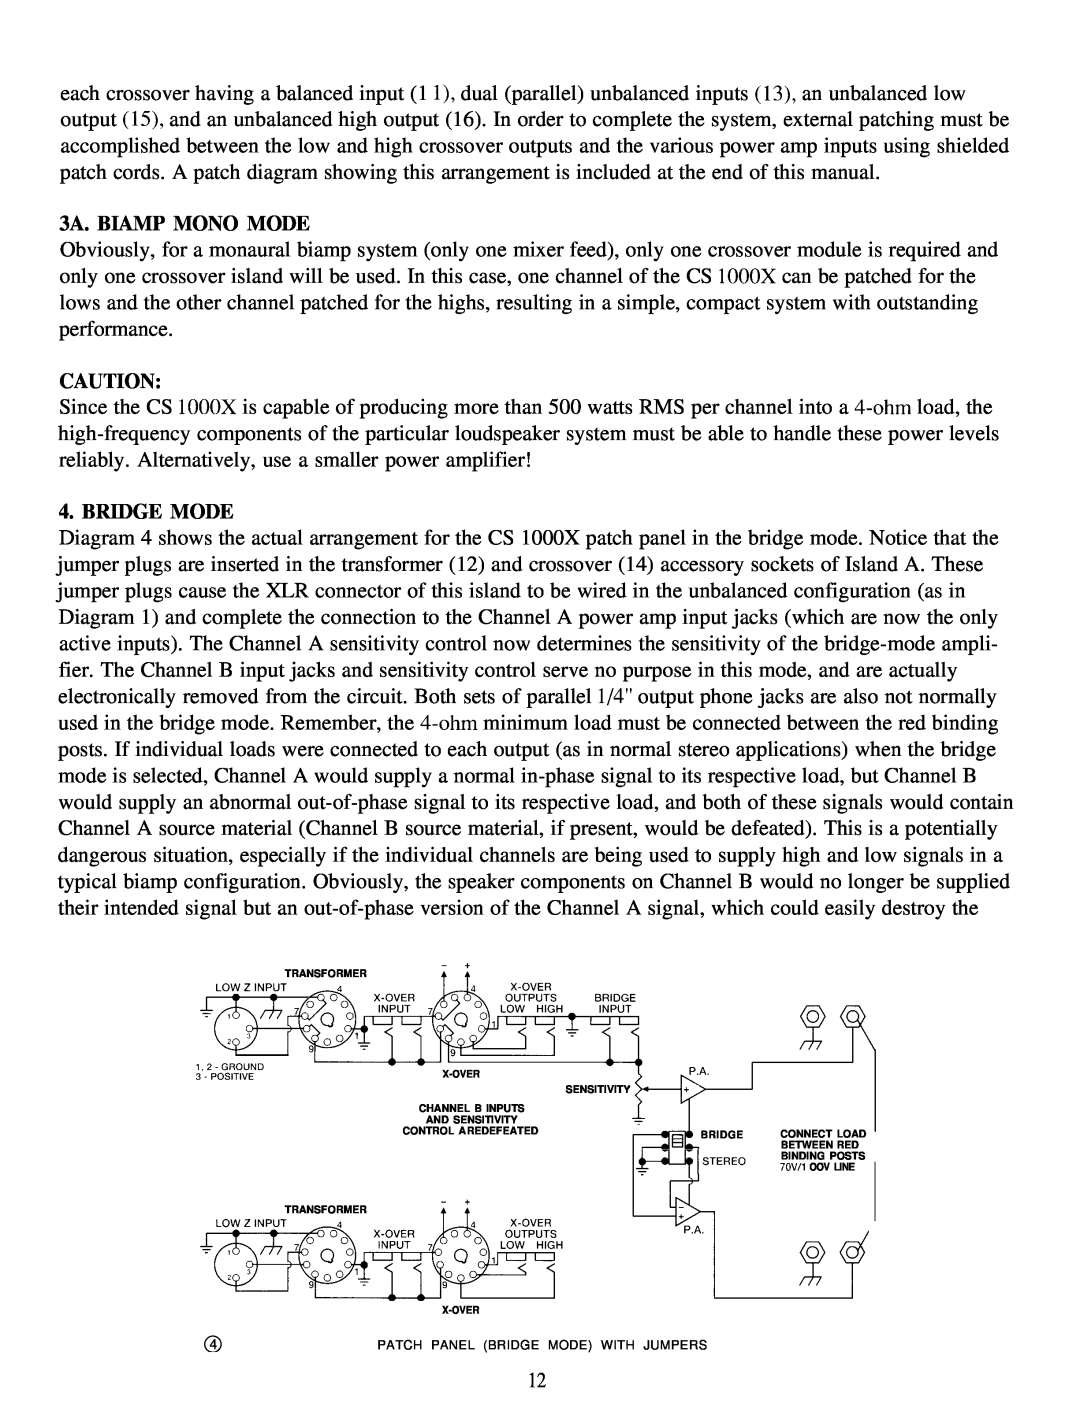 Peavey CS 1000X manual 3A. BIAMP MONO MODE, Bridge Mode 